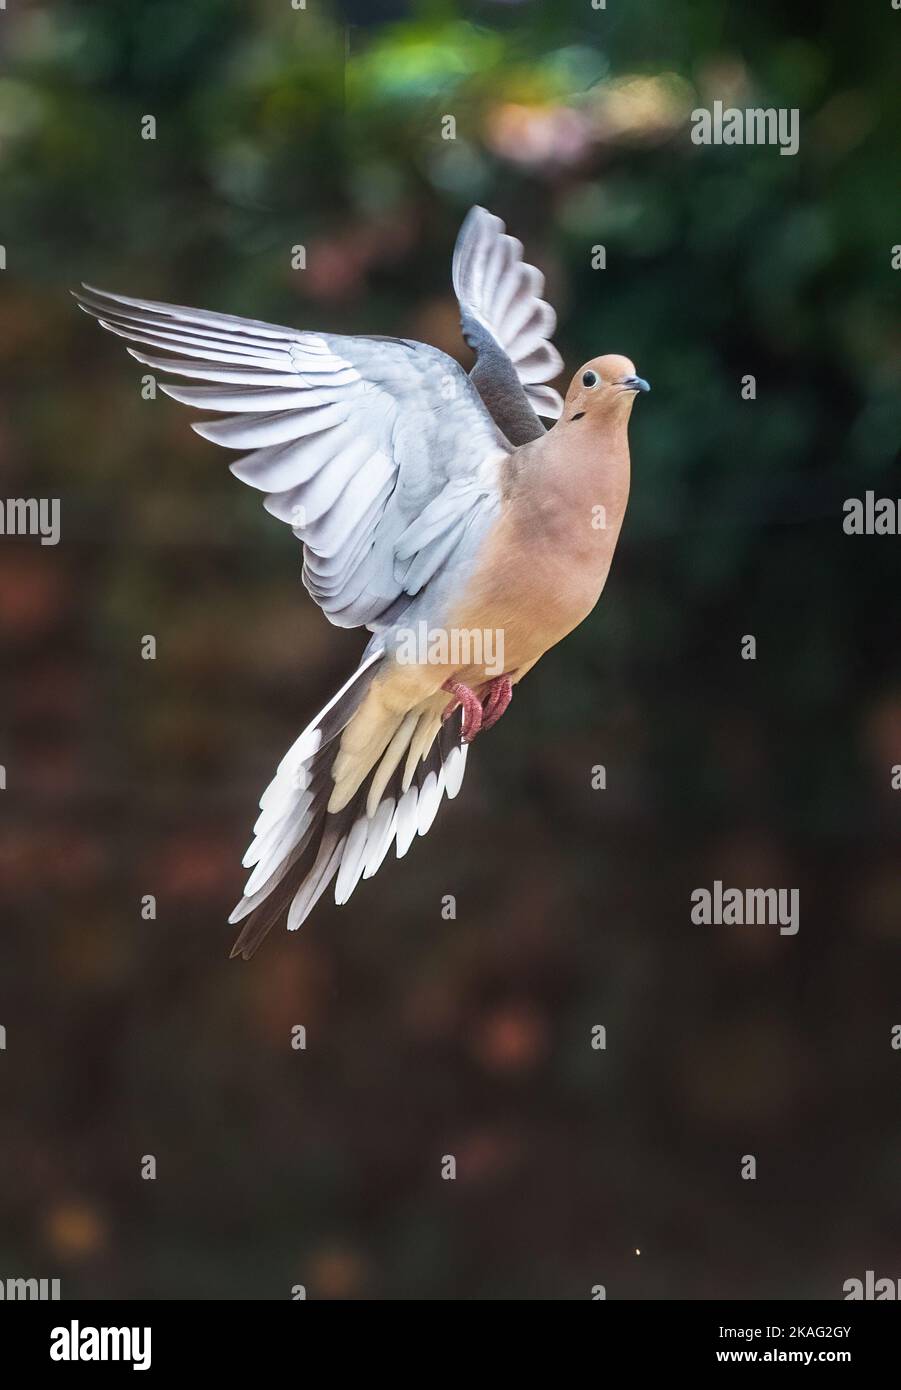 Mourning dove flight Stock Photo